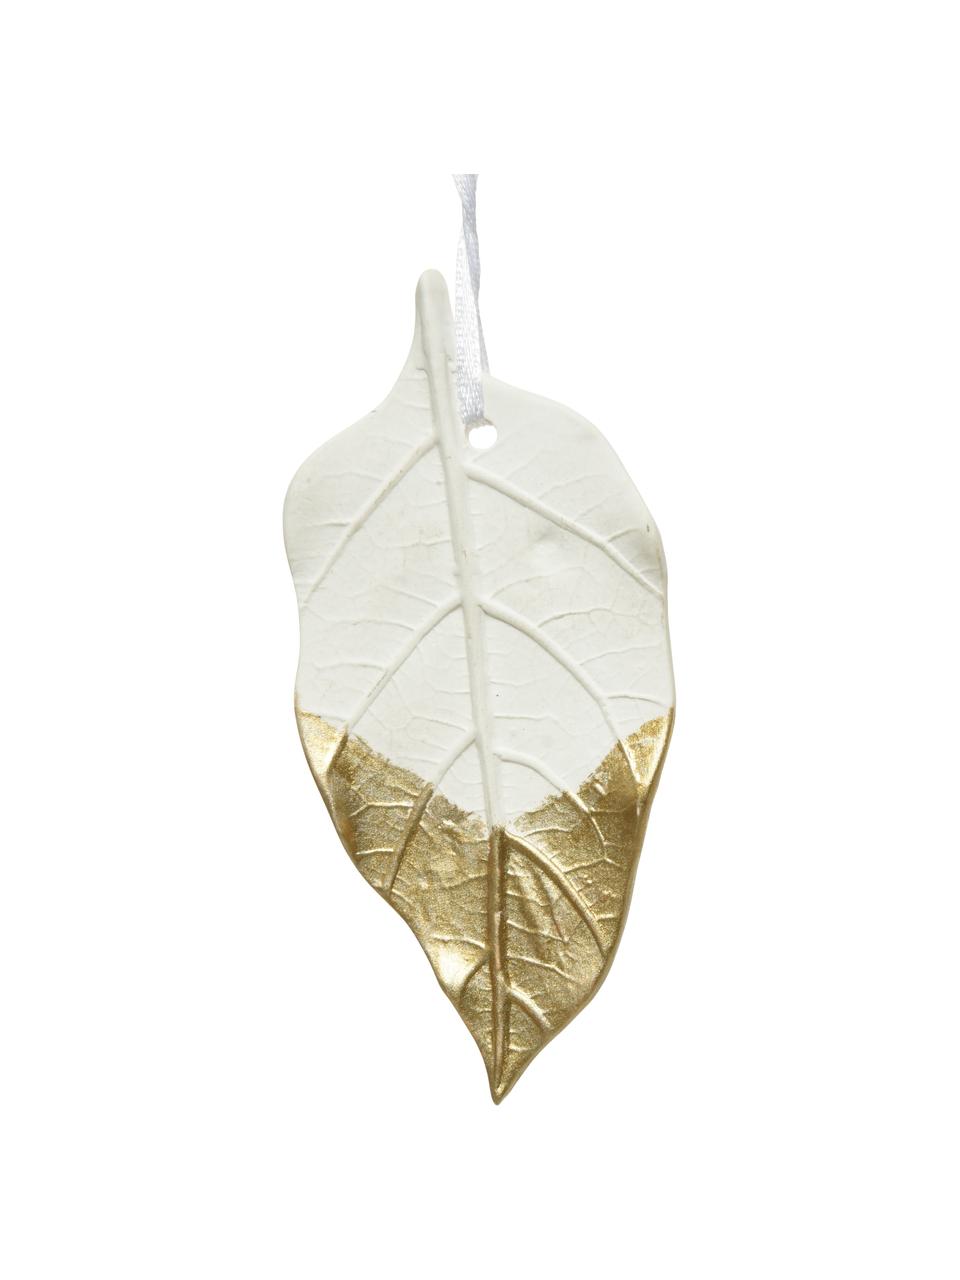 Adornos navideños hojas Leaves, 3 uds., Porcelana, Blanco, dorado, An 4 x Al 13 cm